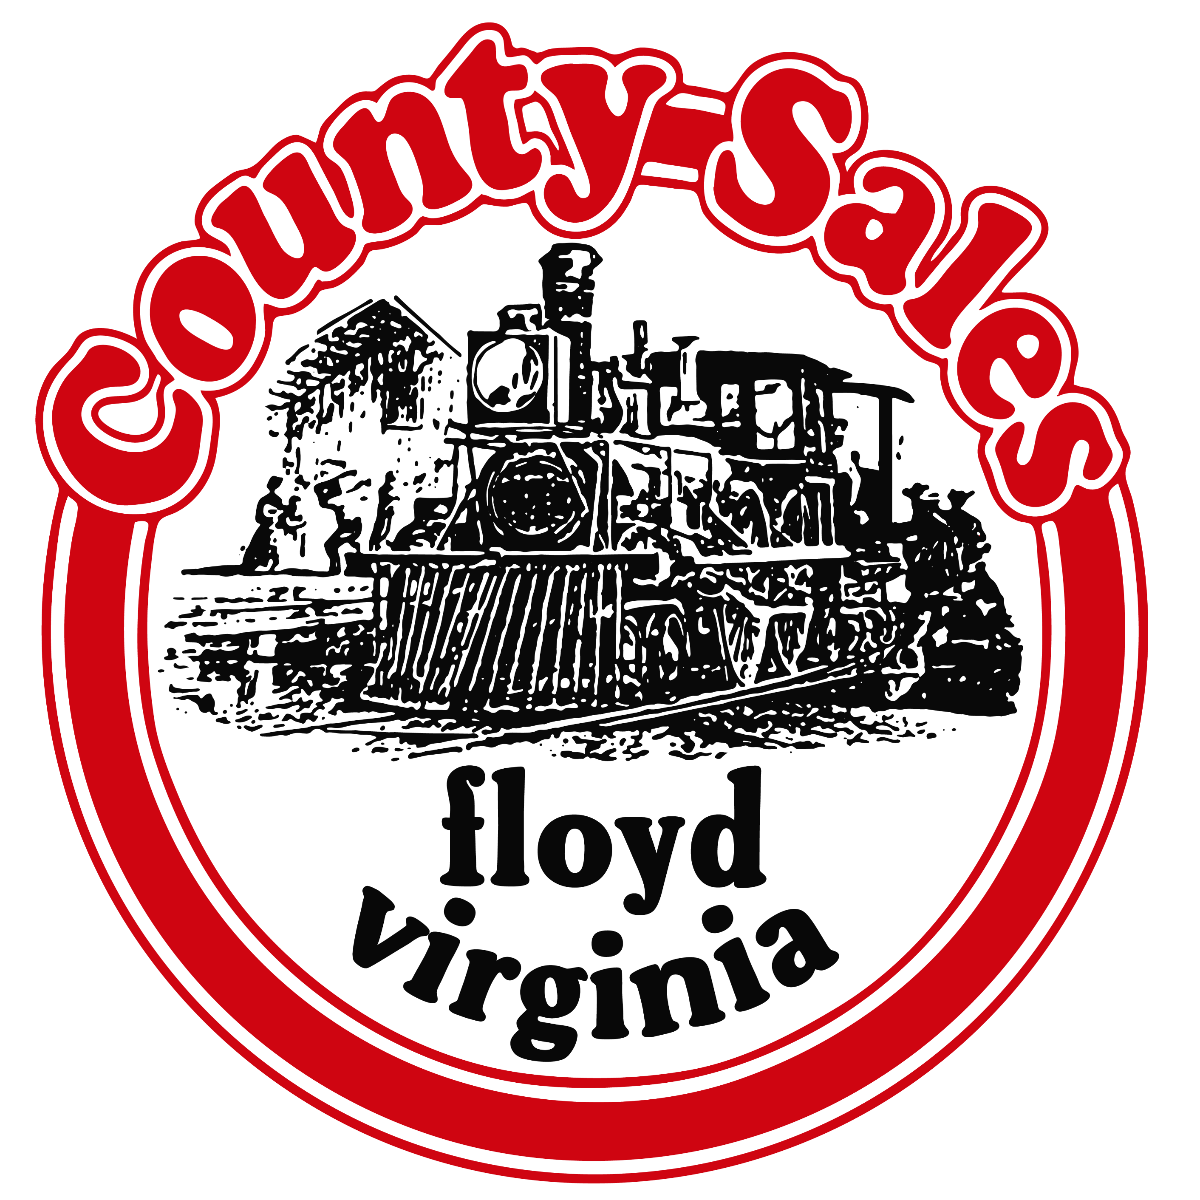 County Sales Logo